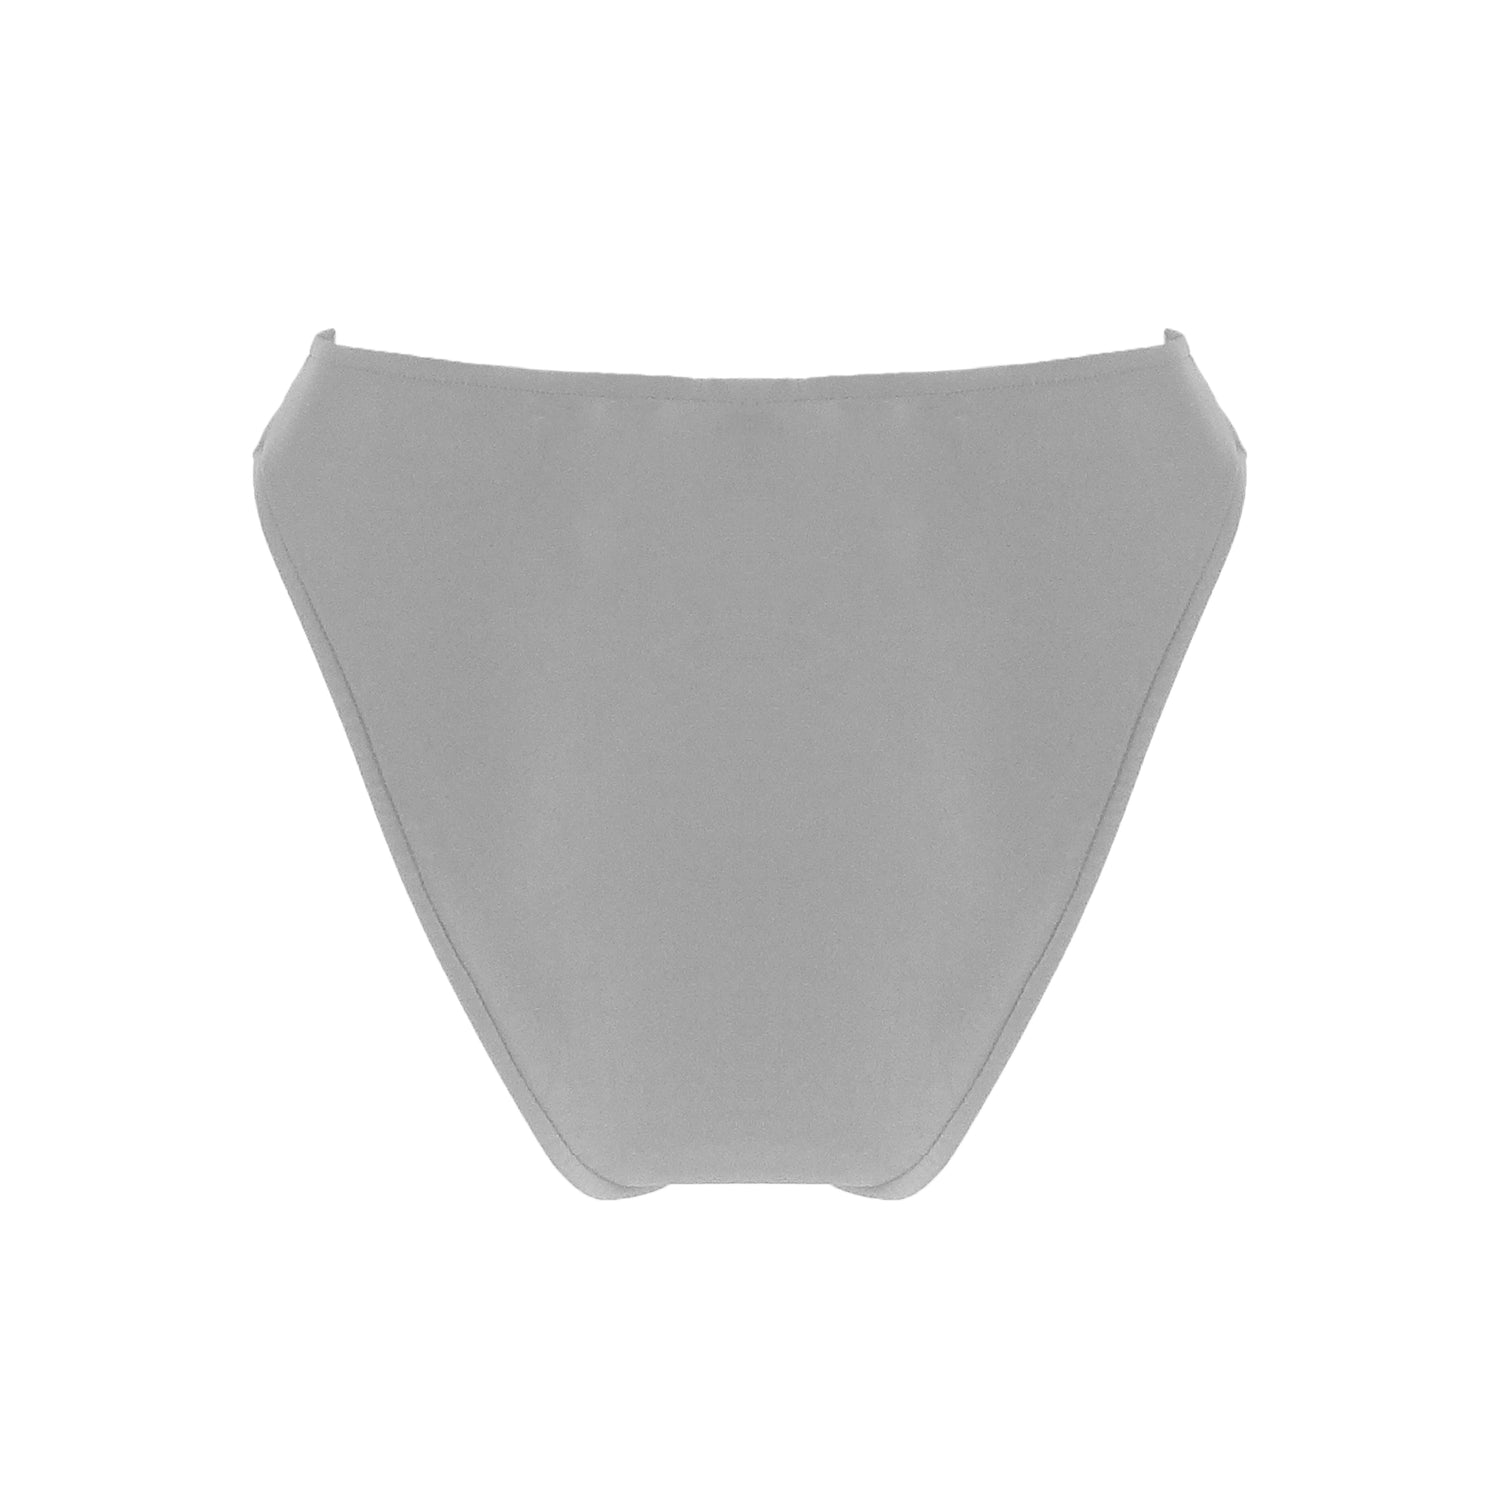 Back view of light grey High waist bikini bottom with high cut legs and cheeky bum coverage.